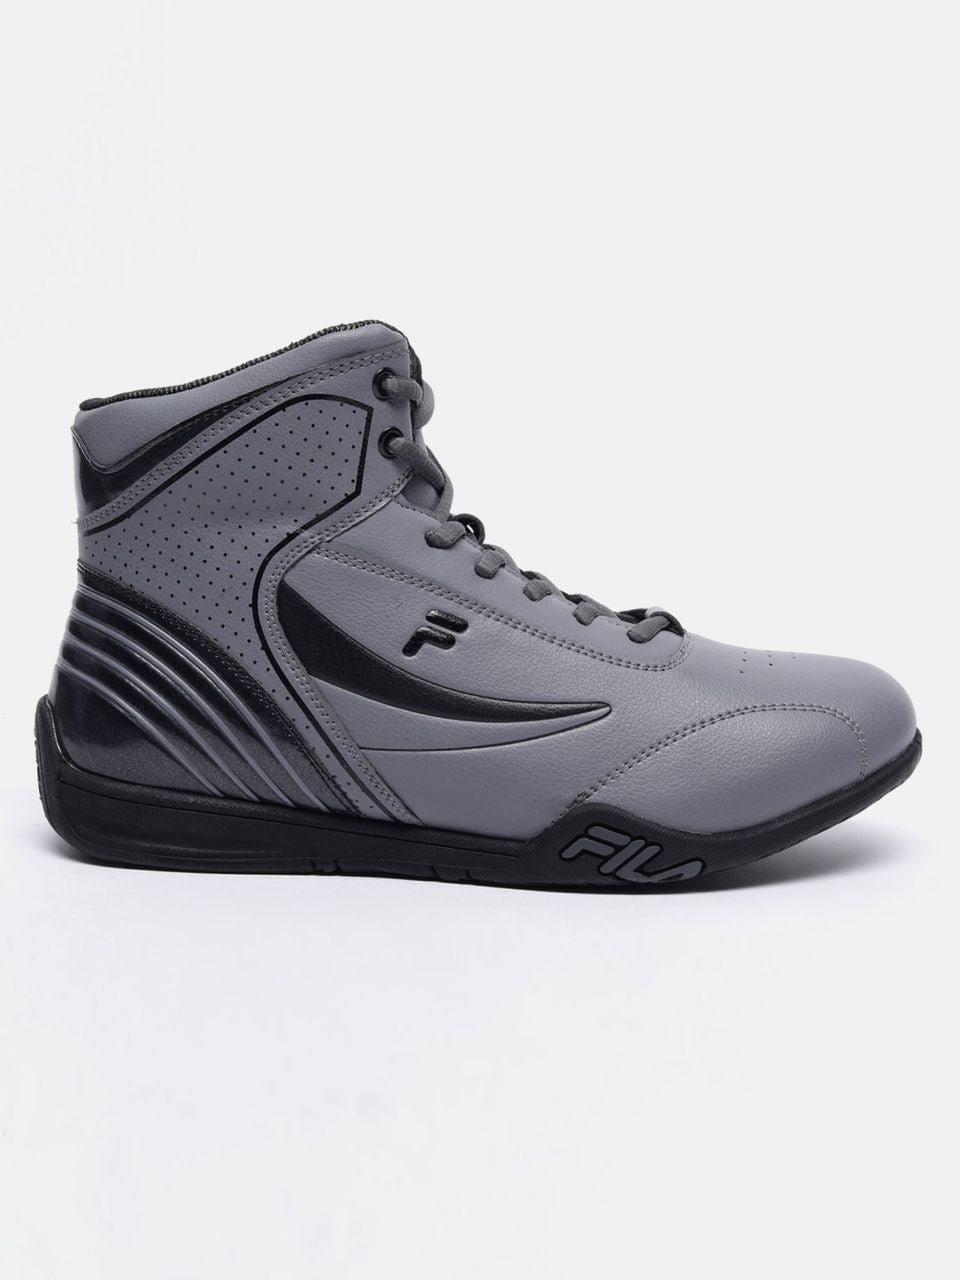 FL RAMEN 2 High-Top Sneakers(Grey)